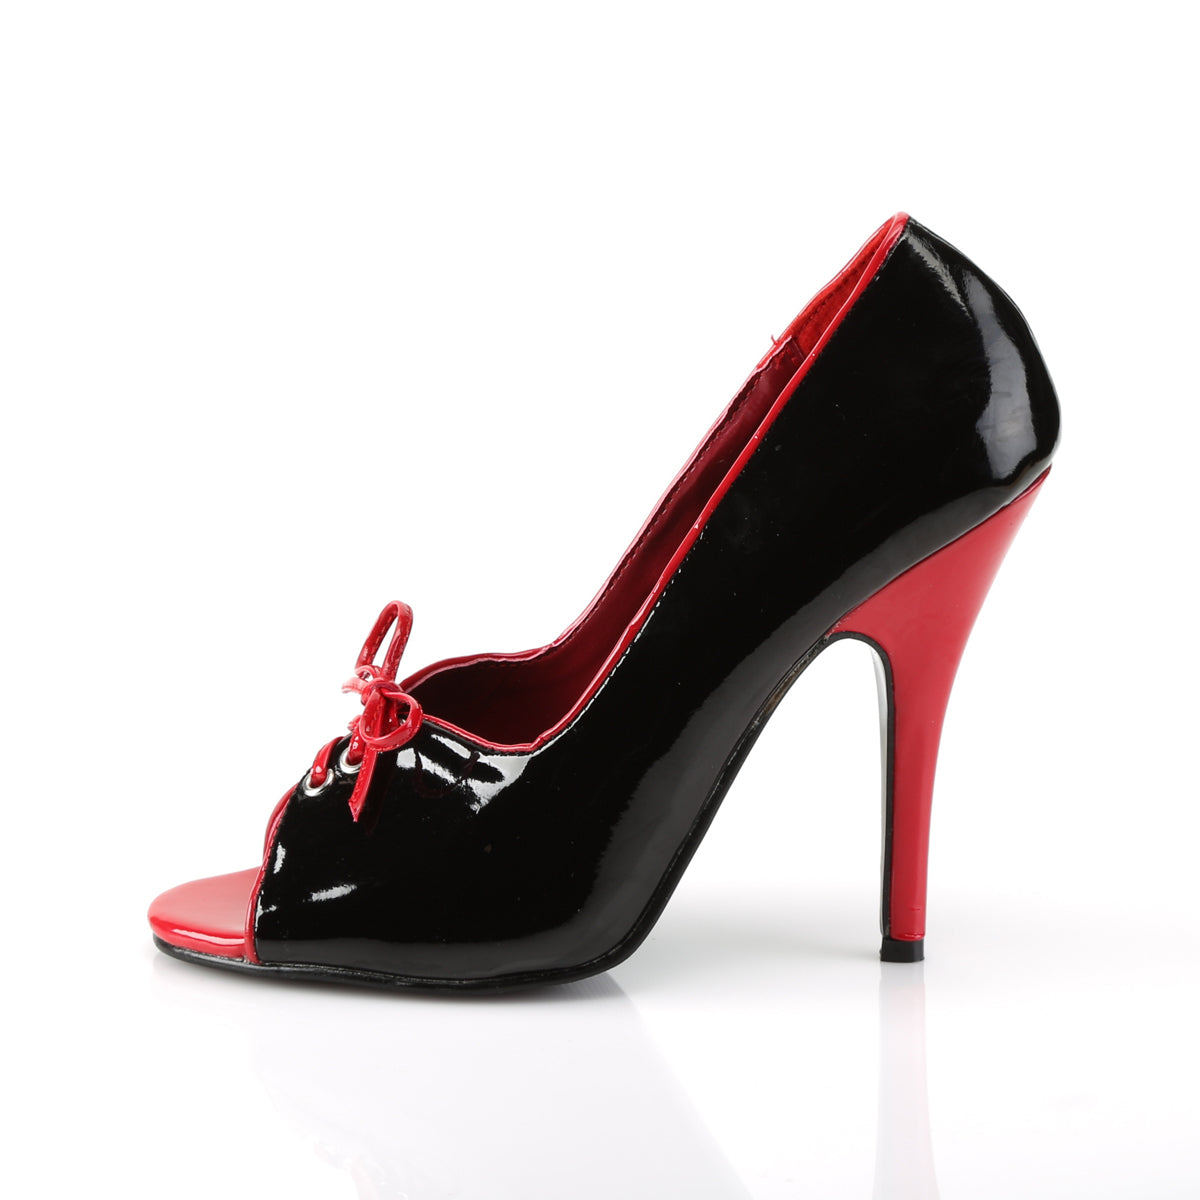 SEDUCE-216 Pleaser 5 Inch Heel Black and Red Fetish Footwear-Pleaser- Sexy Shoes Pole Dance Heels